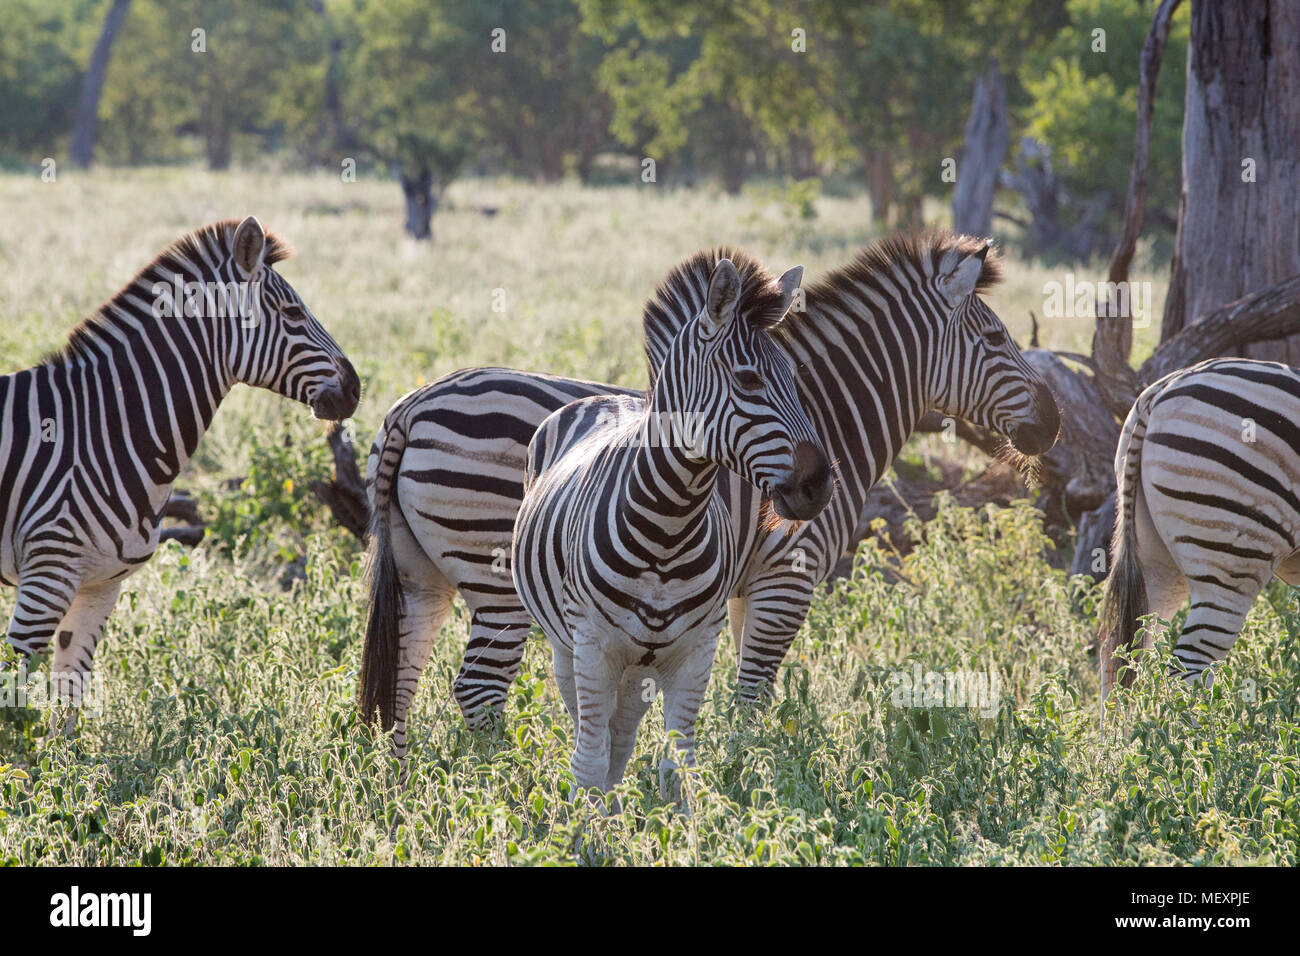 Burchell’s, Common or Plains, Zebras (Equus quagga burchellii). Woodland savanna. Overlappng animals. Early morning light. Stock Photo